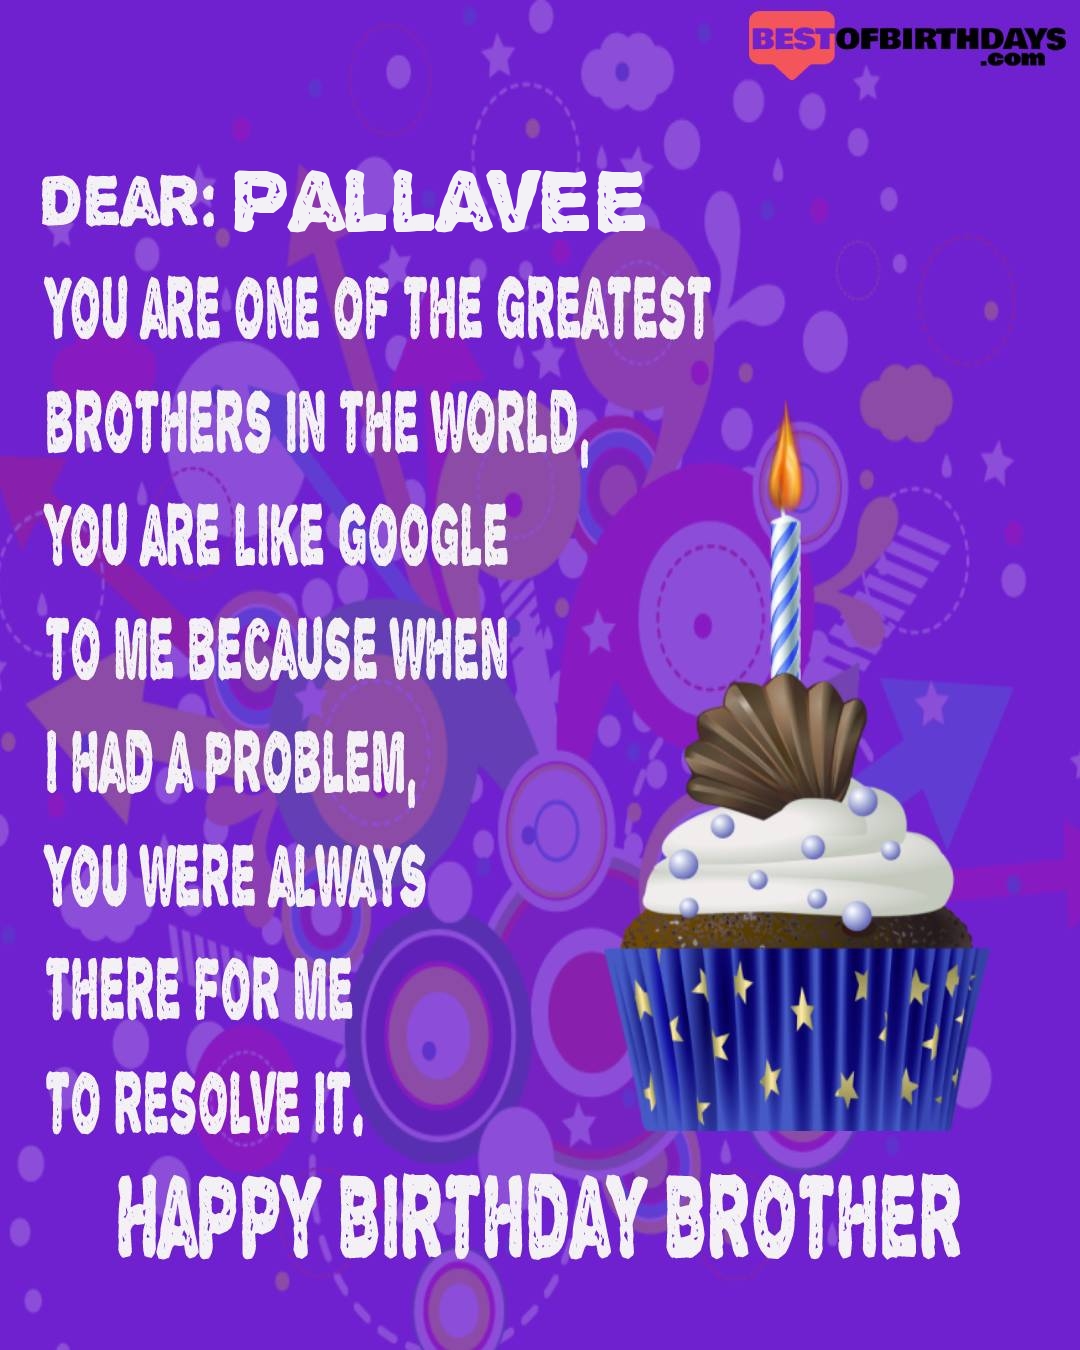 Happy birthday pallavee bhai brother bro